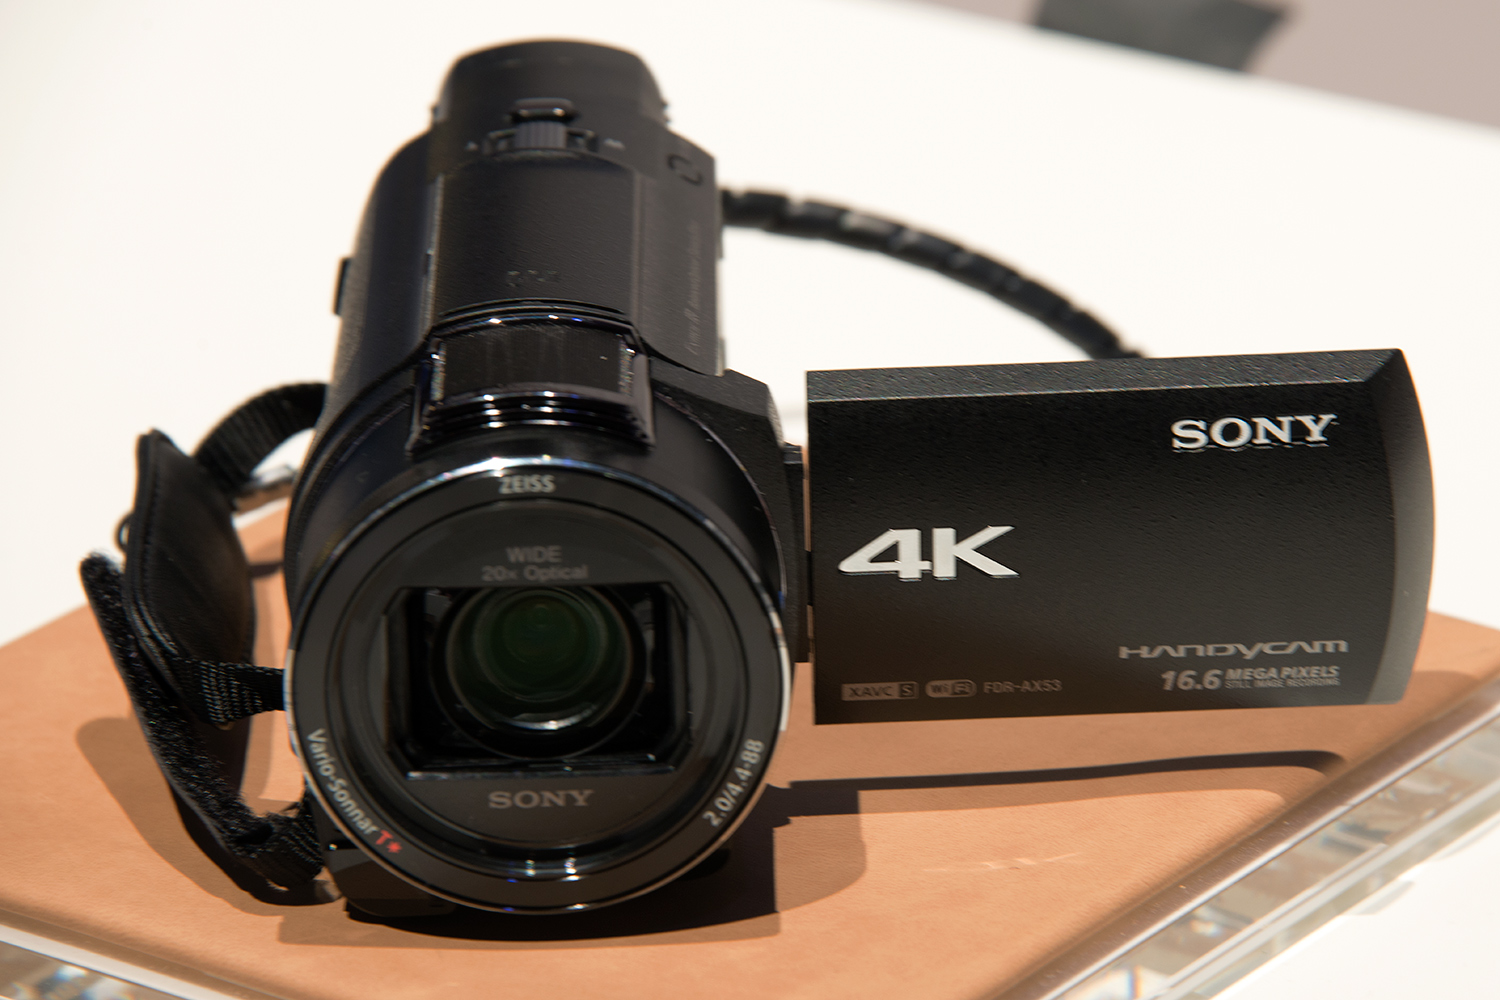 Sony New 4K Handycam